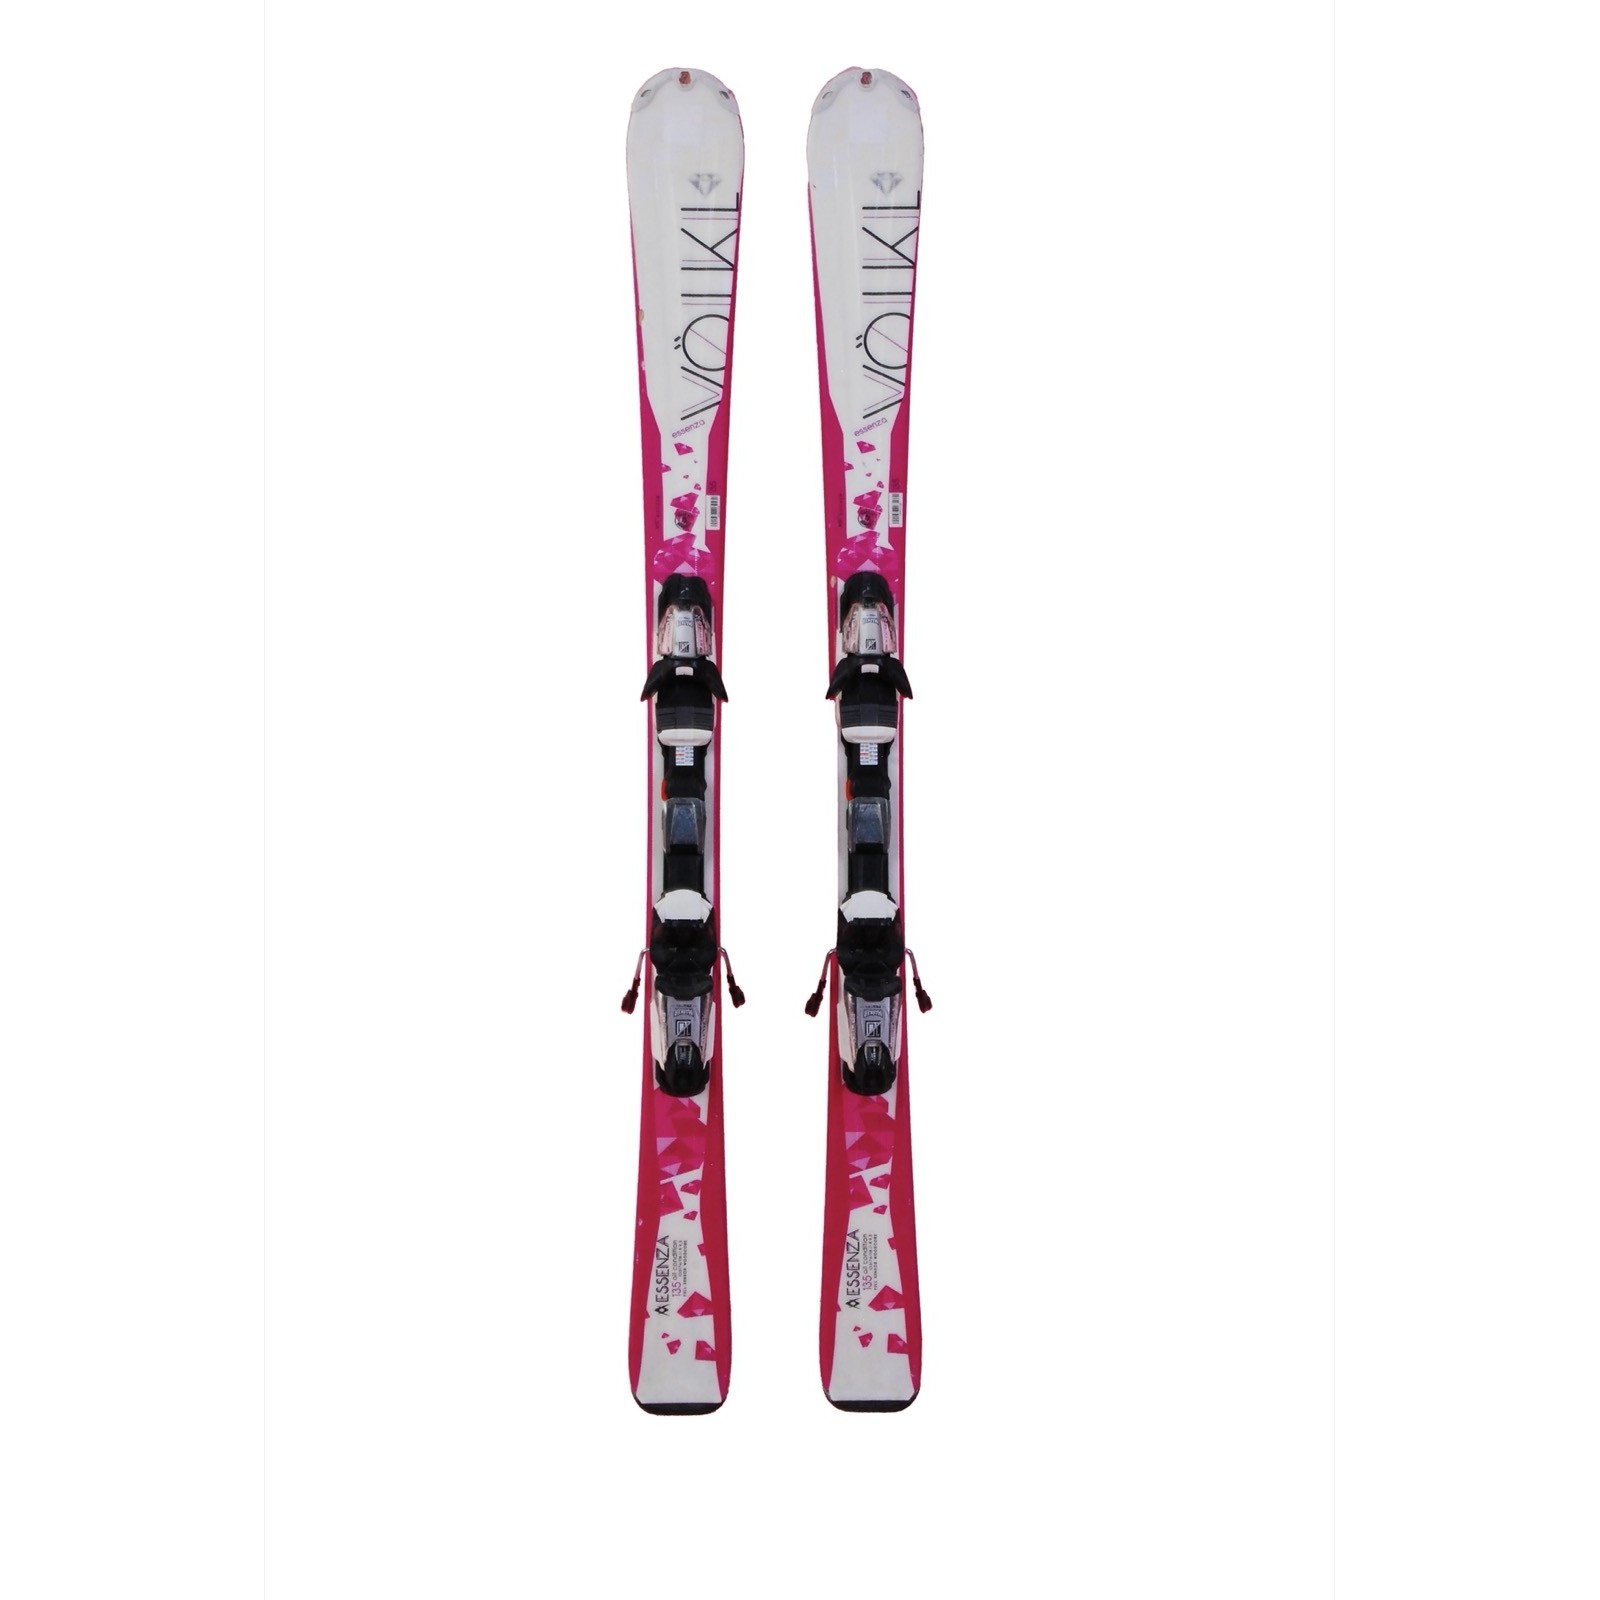 fixations------PETIT BUDGET Volkl ski adulte occasion VOLKL "ESSENZA" tailles:149 cm 